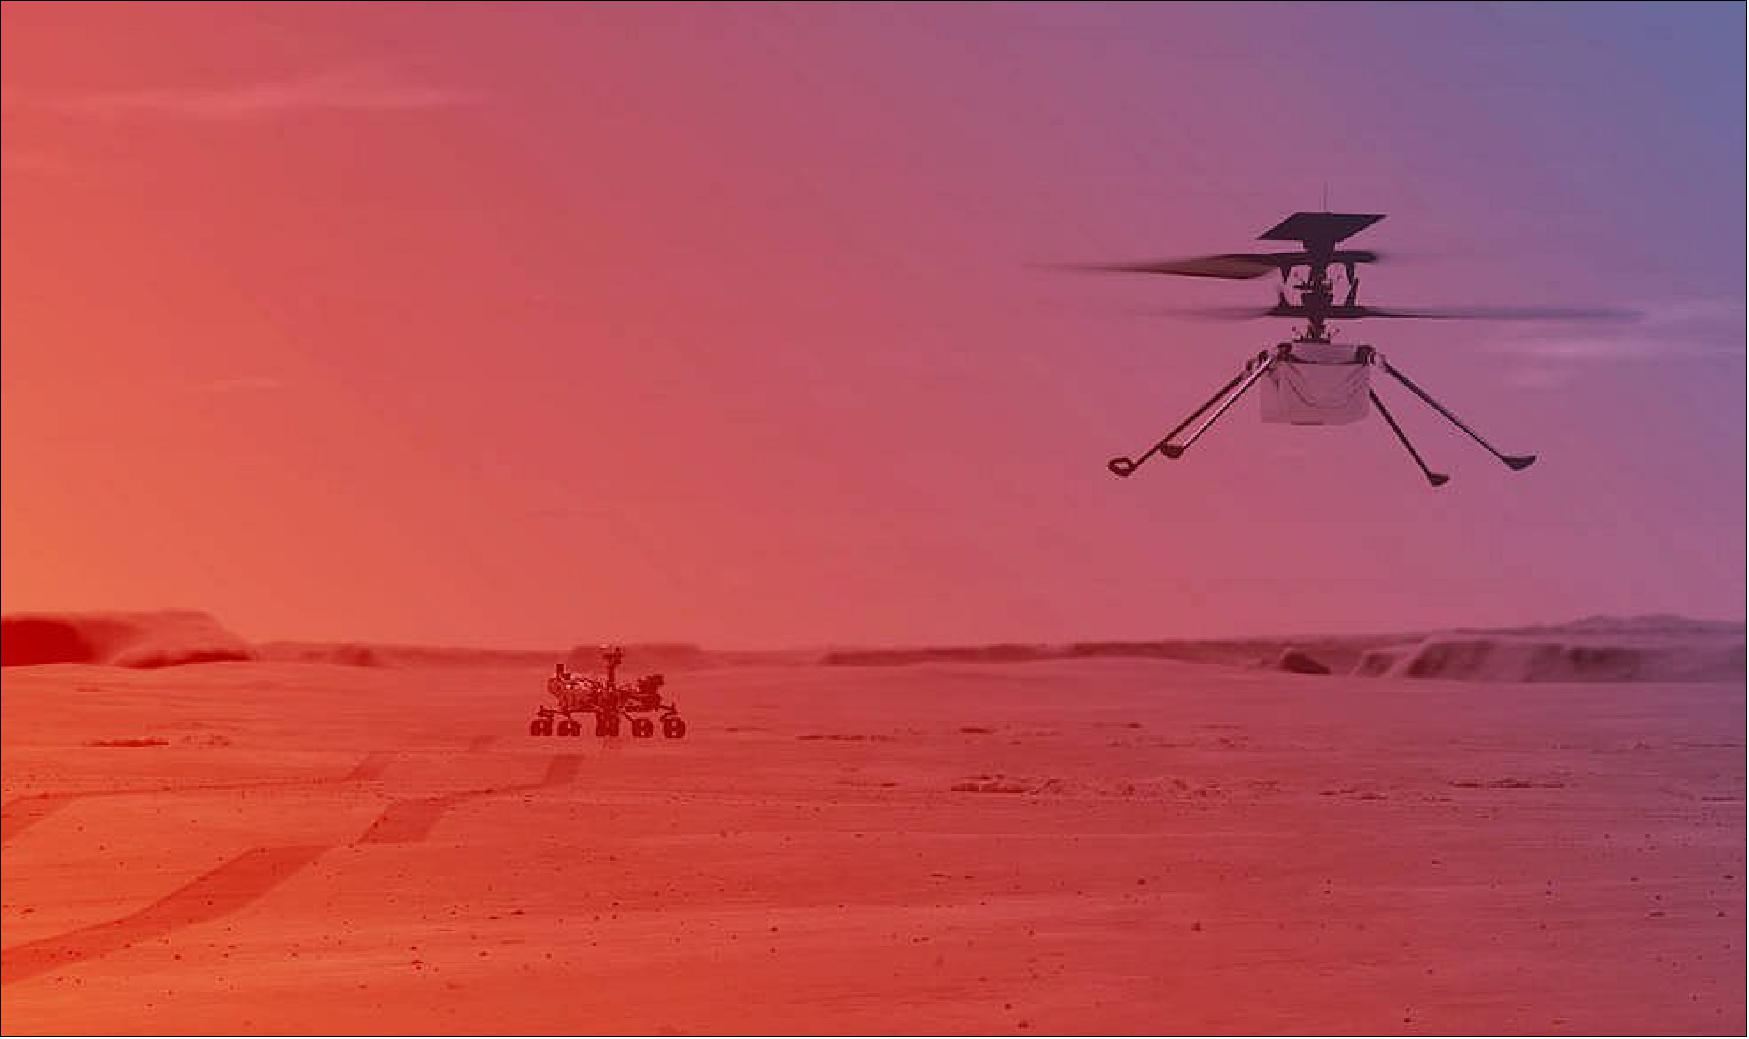 Figure 38: An illustration of NASA's Ingenuity Helicopter flying on Mars (image credit: NASA/JPL-Caltech)